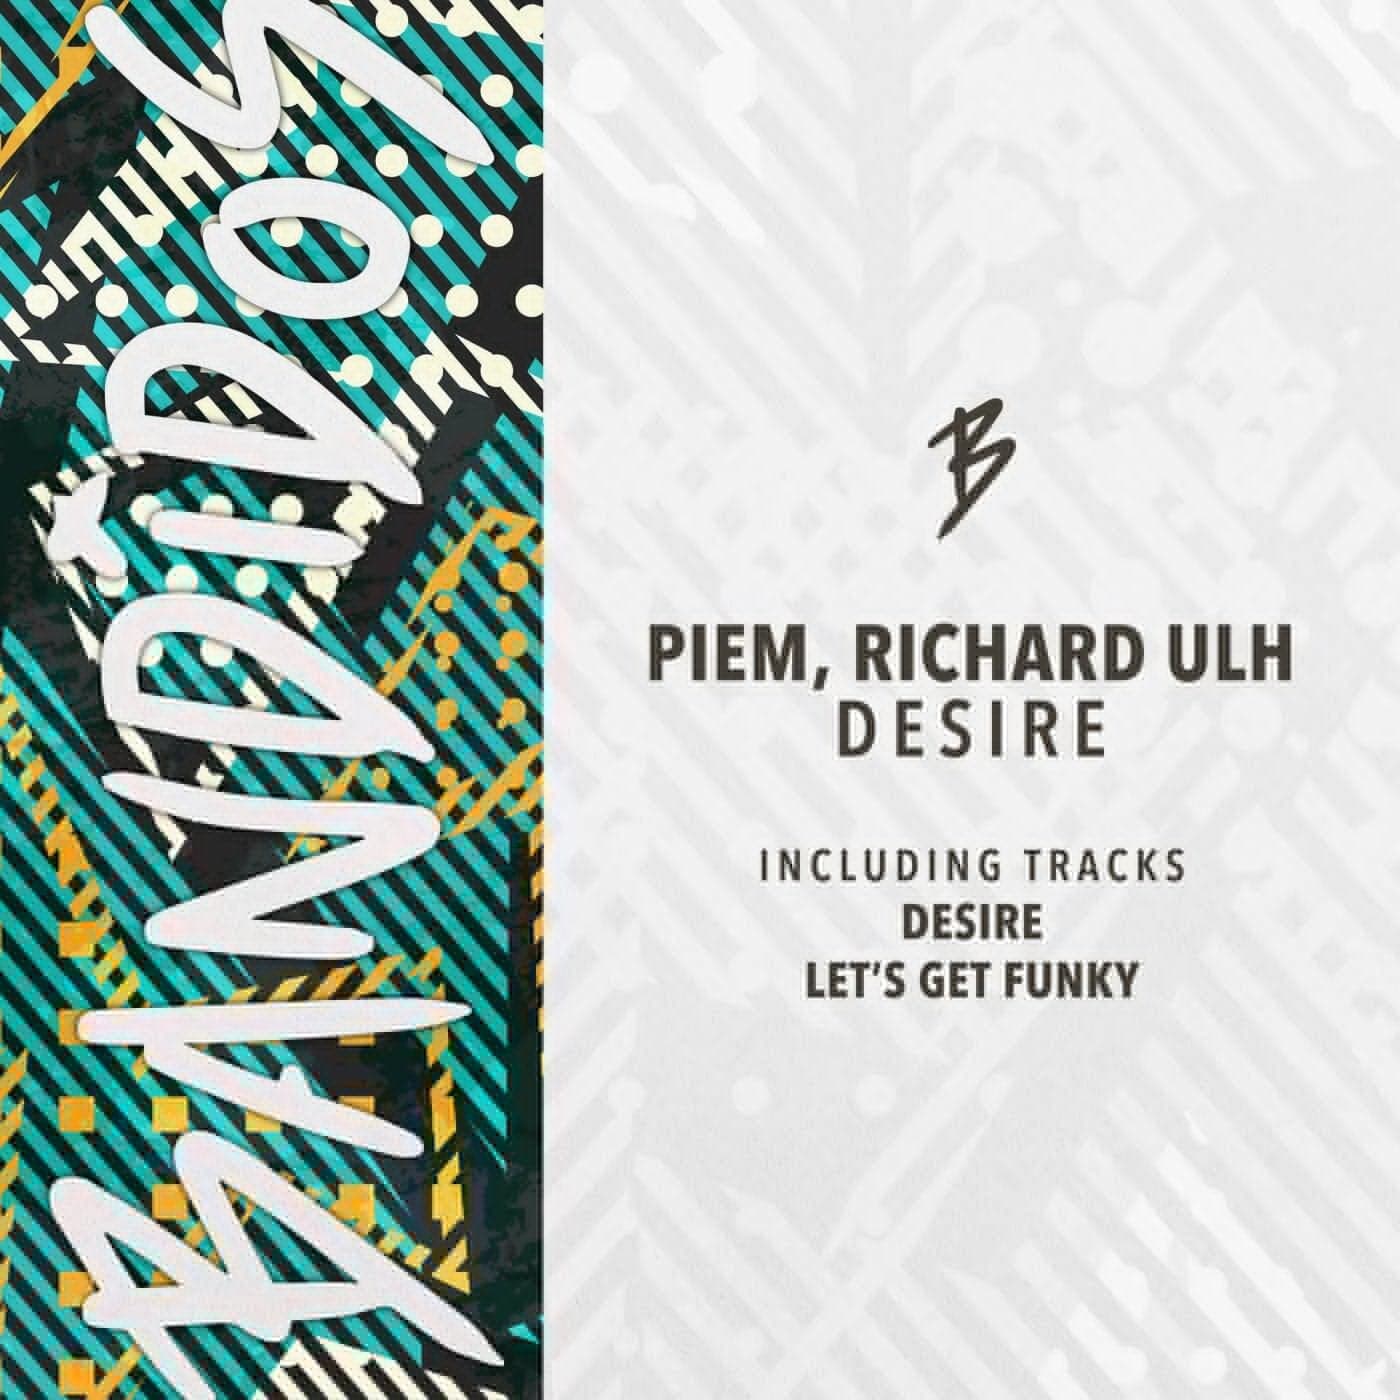 Download Piem, Richard Ulh - Desire on Electrobuzz